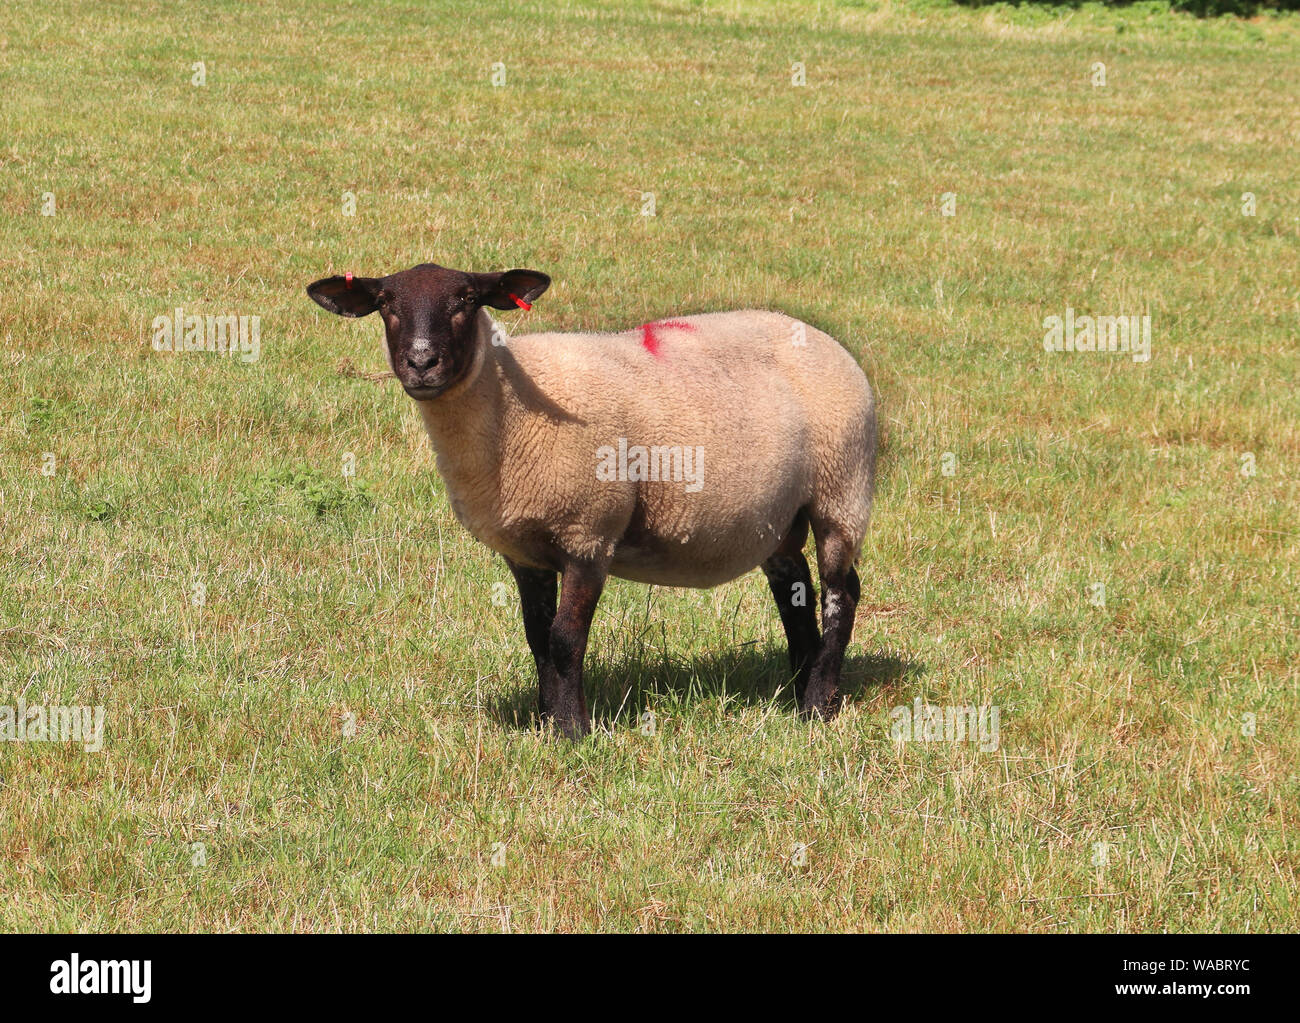 Suffolk sheep in an English Meadow Stock Photo